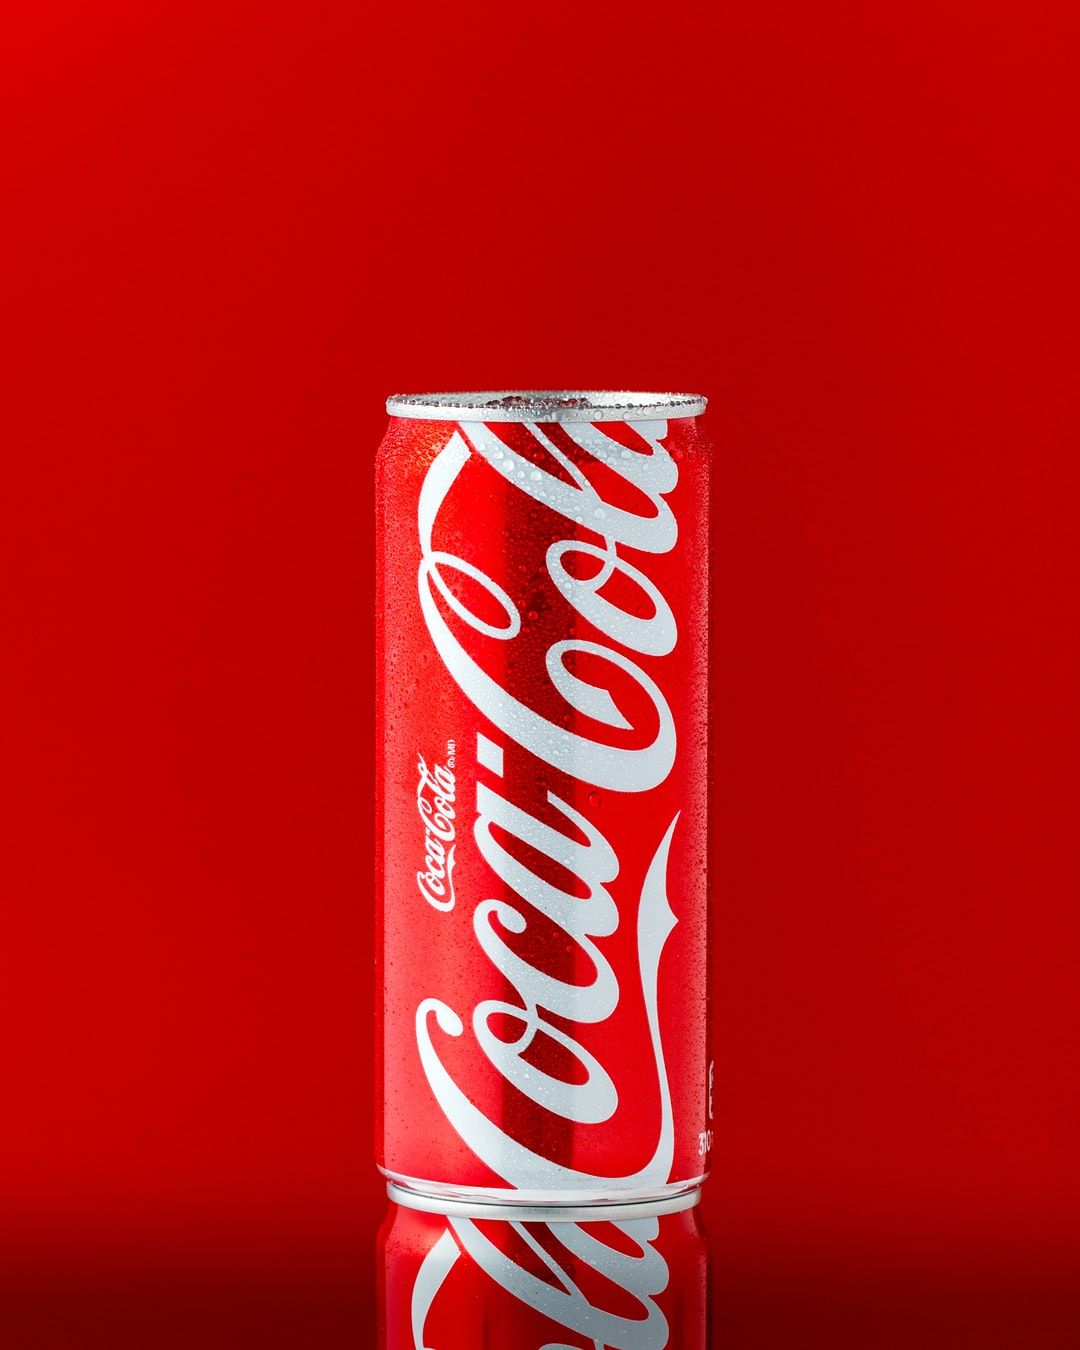 Coca Cola Picture. Download Free Image